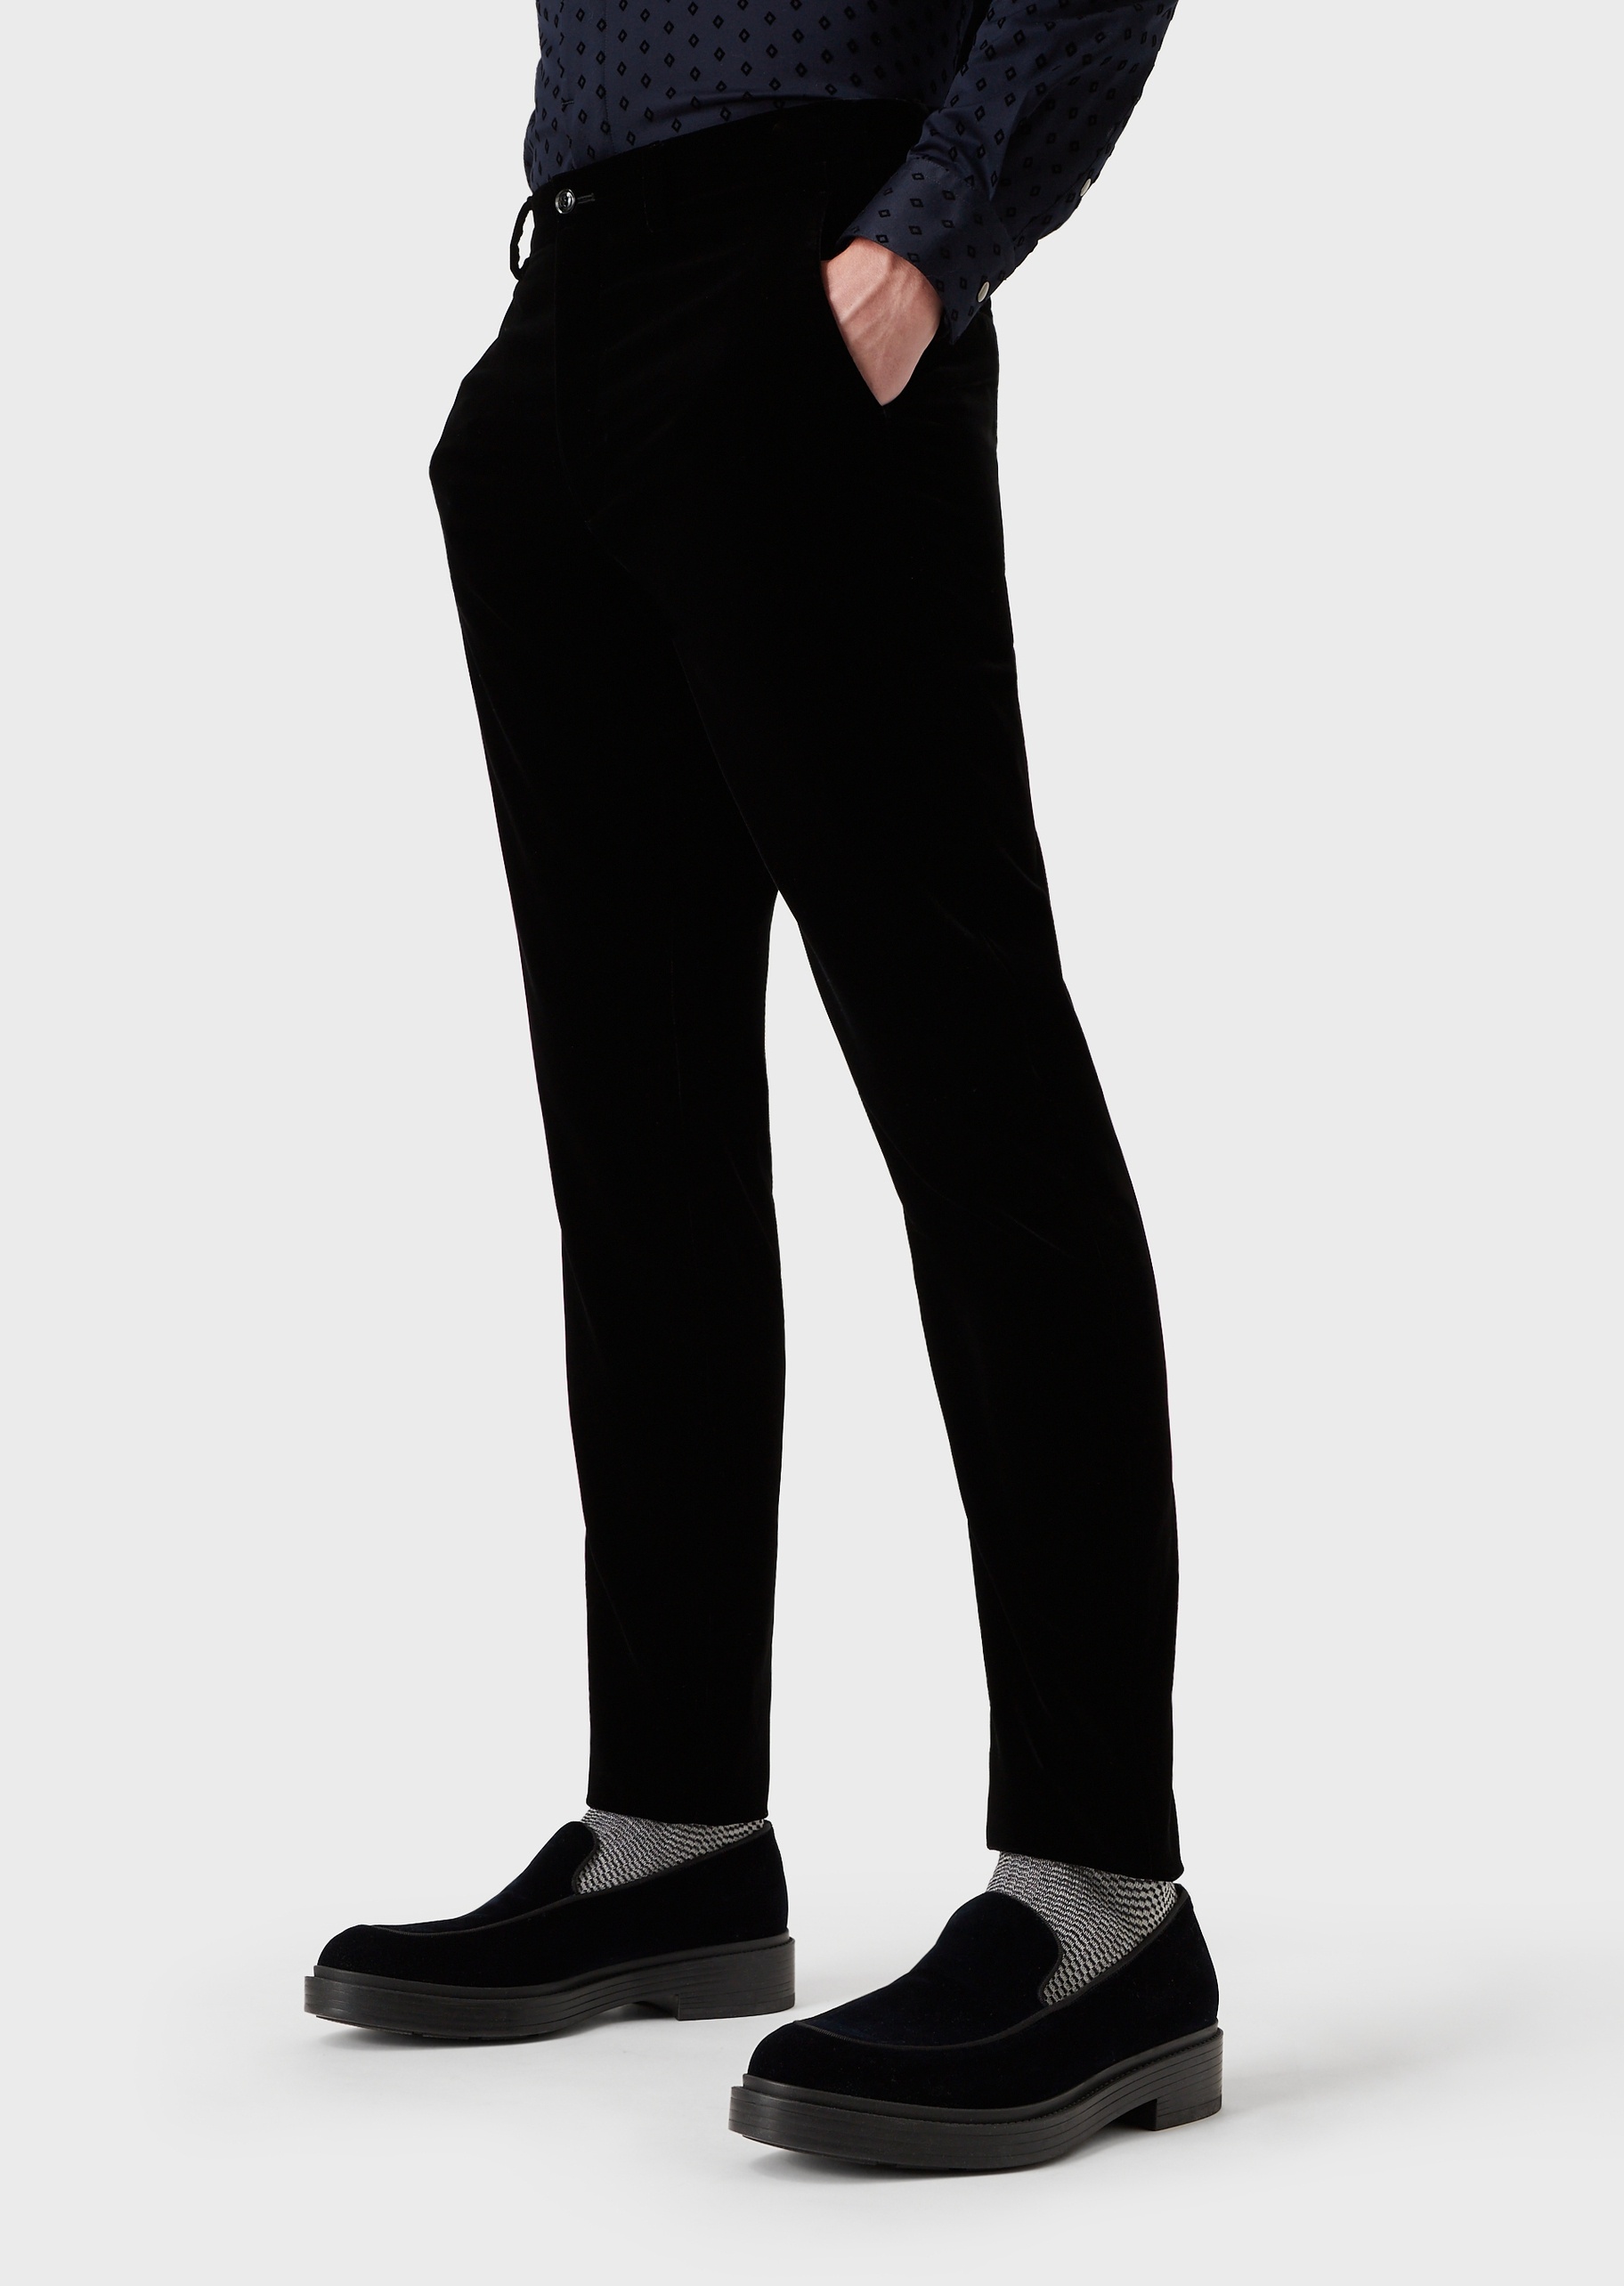 Giorgio Armani 男士微弹修身长款窄脚纯色休闲裤